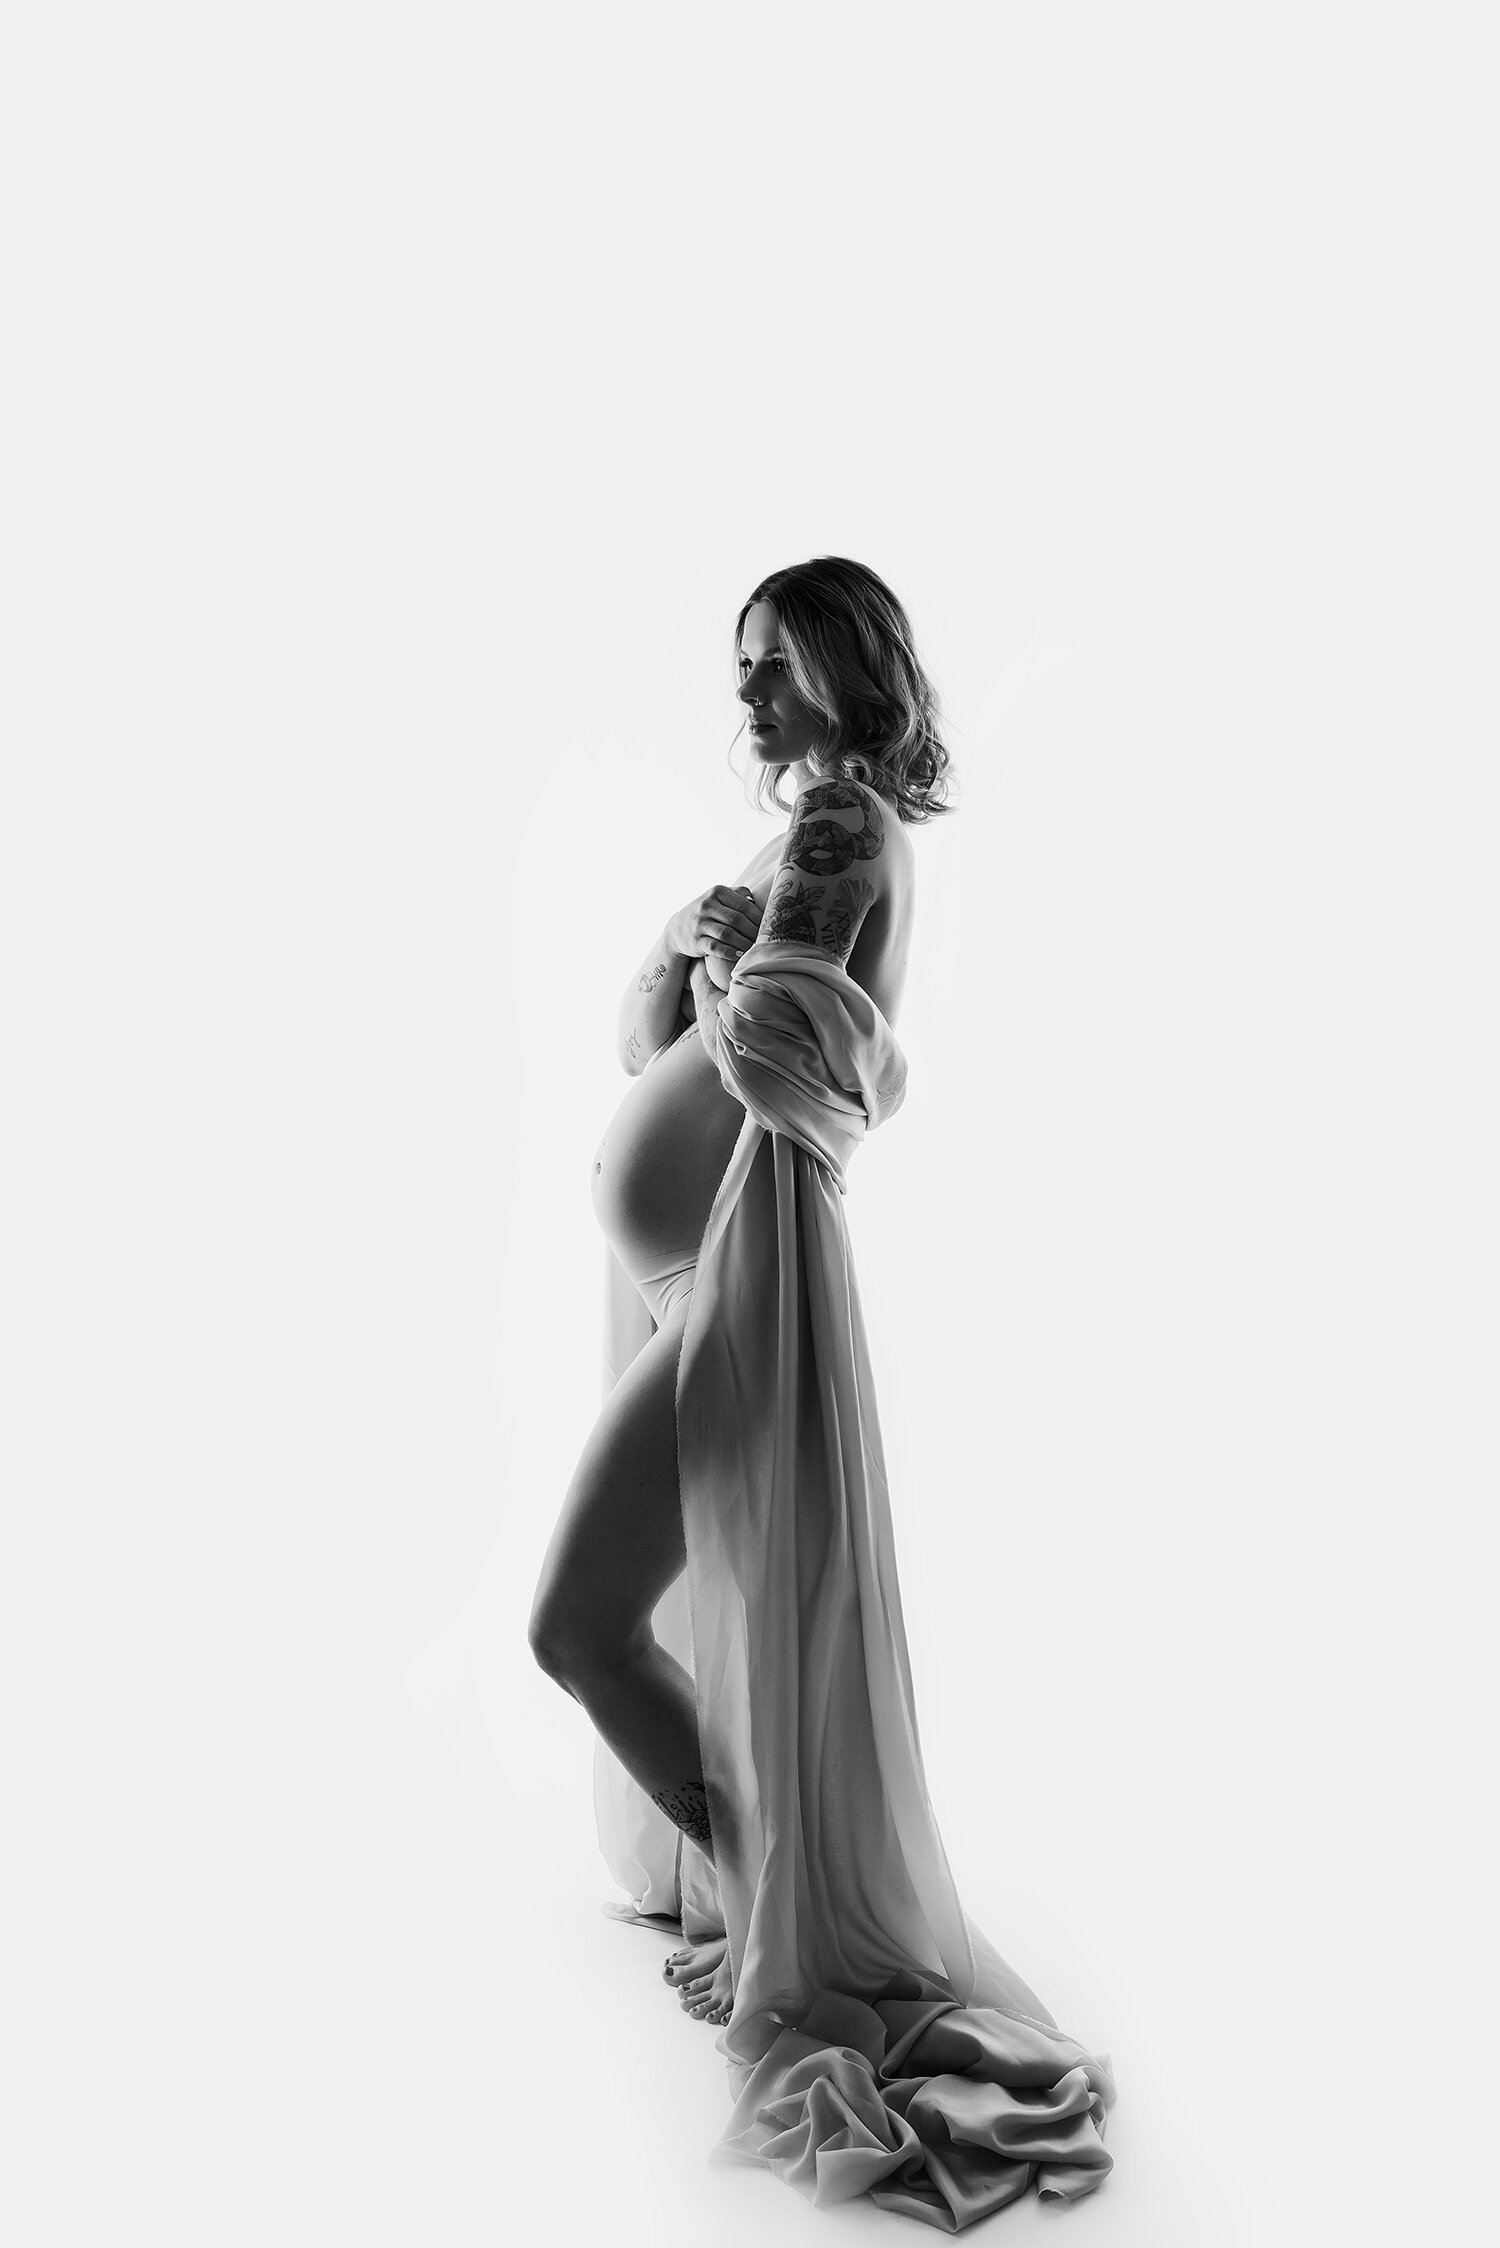 ohio-maternity-photographer-barebabyphotography.jpg